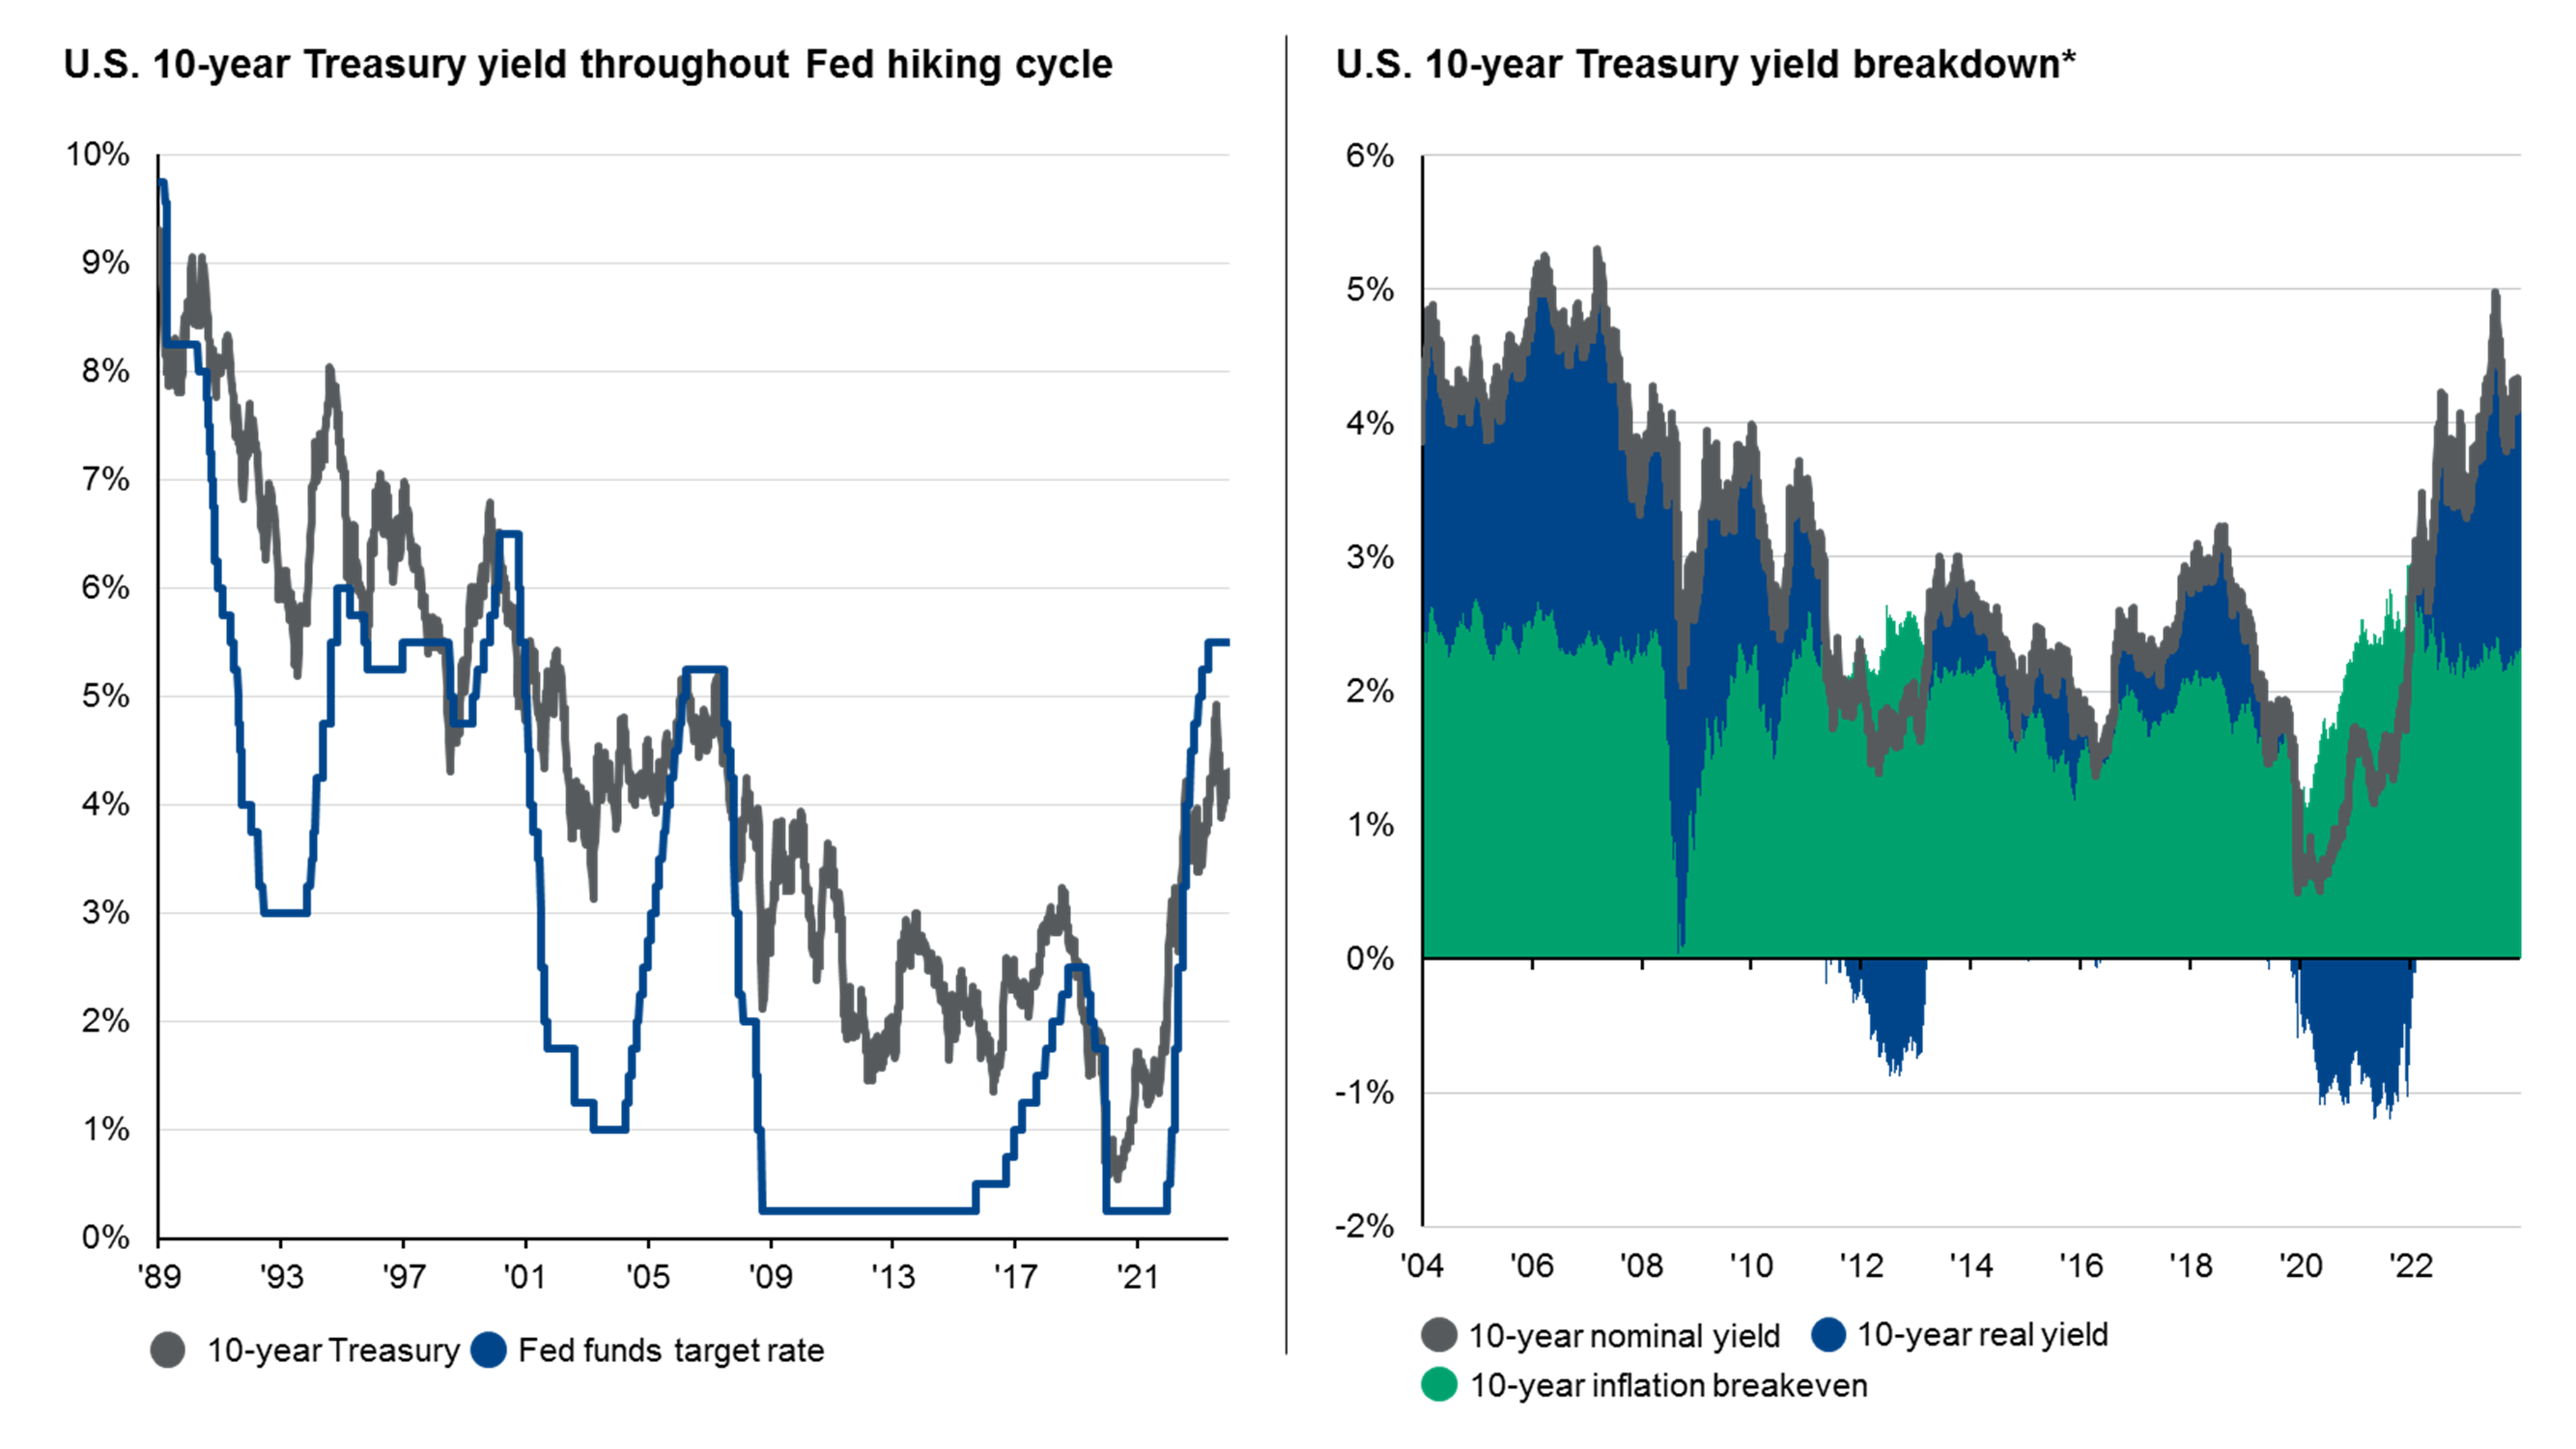 U.S. high yield bond spreads